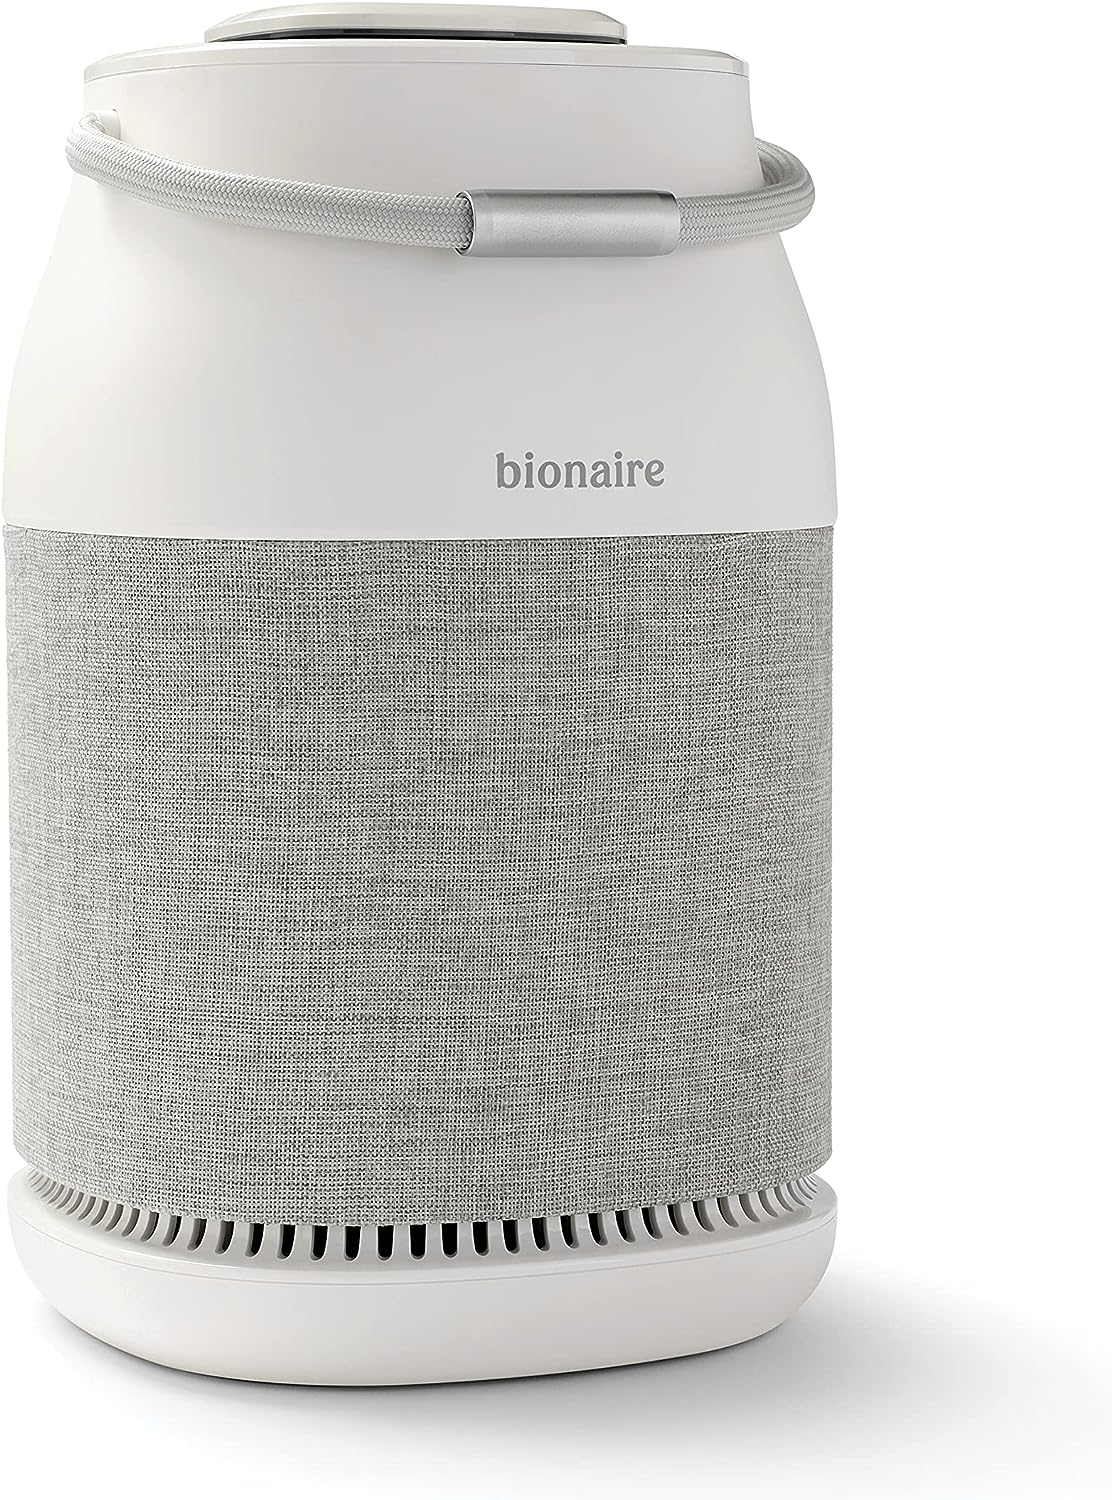 bionaire true hepa 360 uv air purifier home air purifier with true hepa air filter